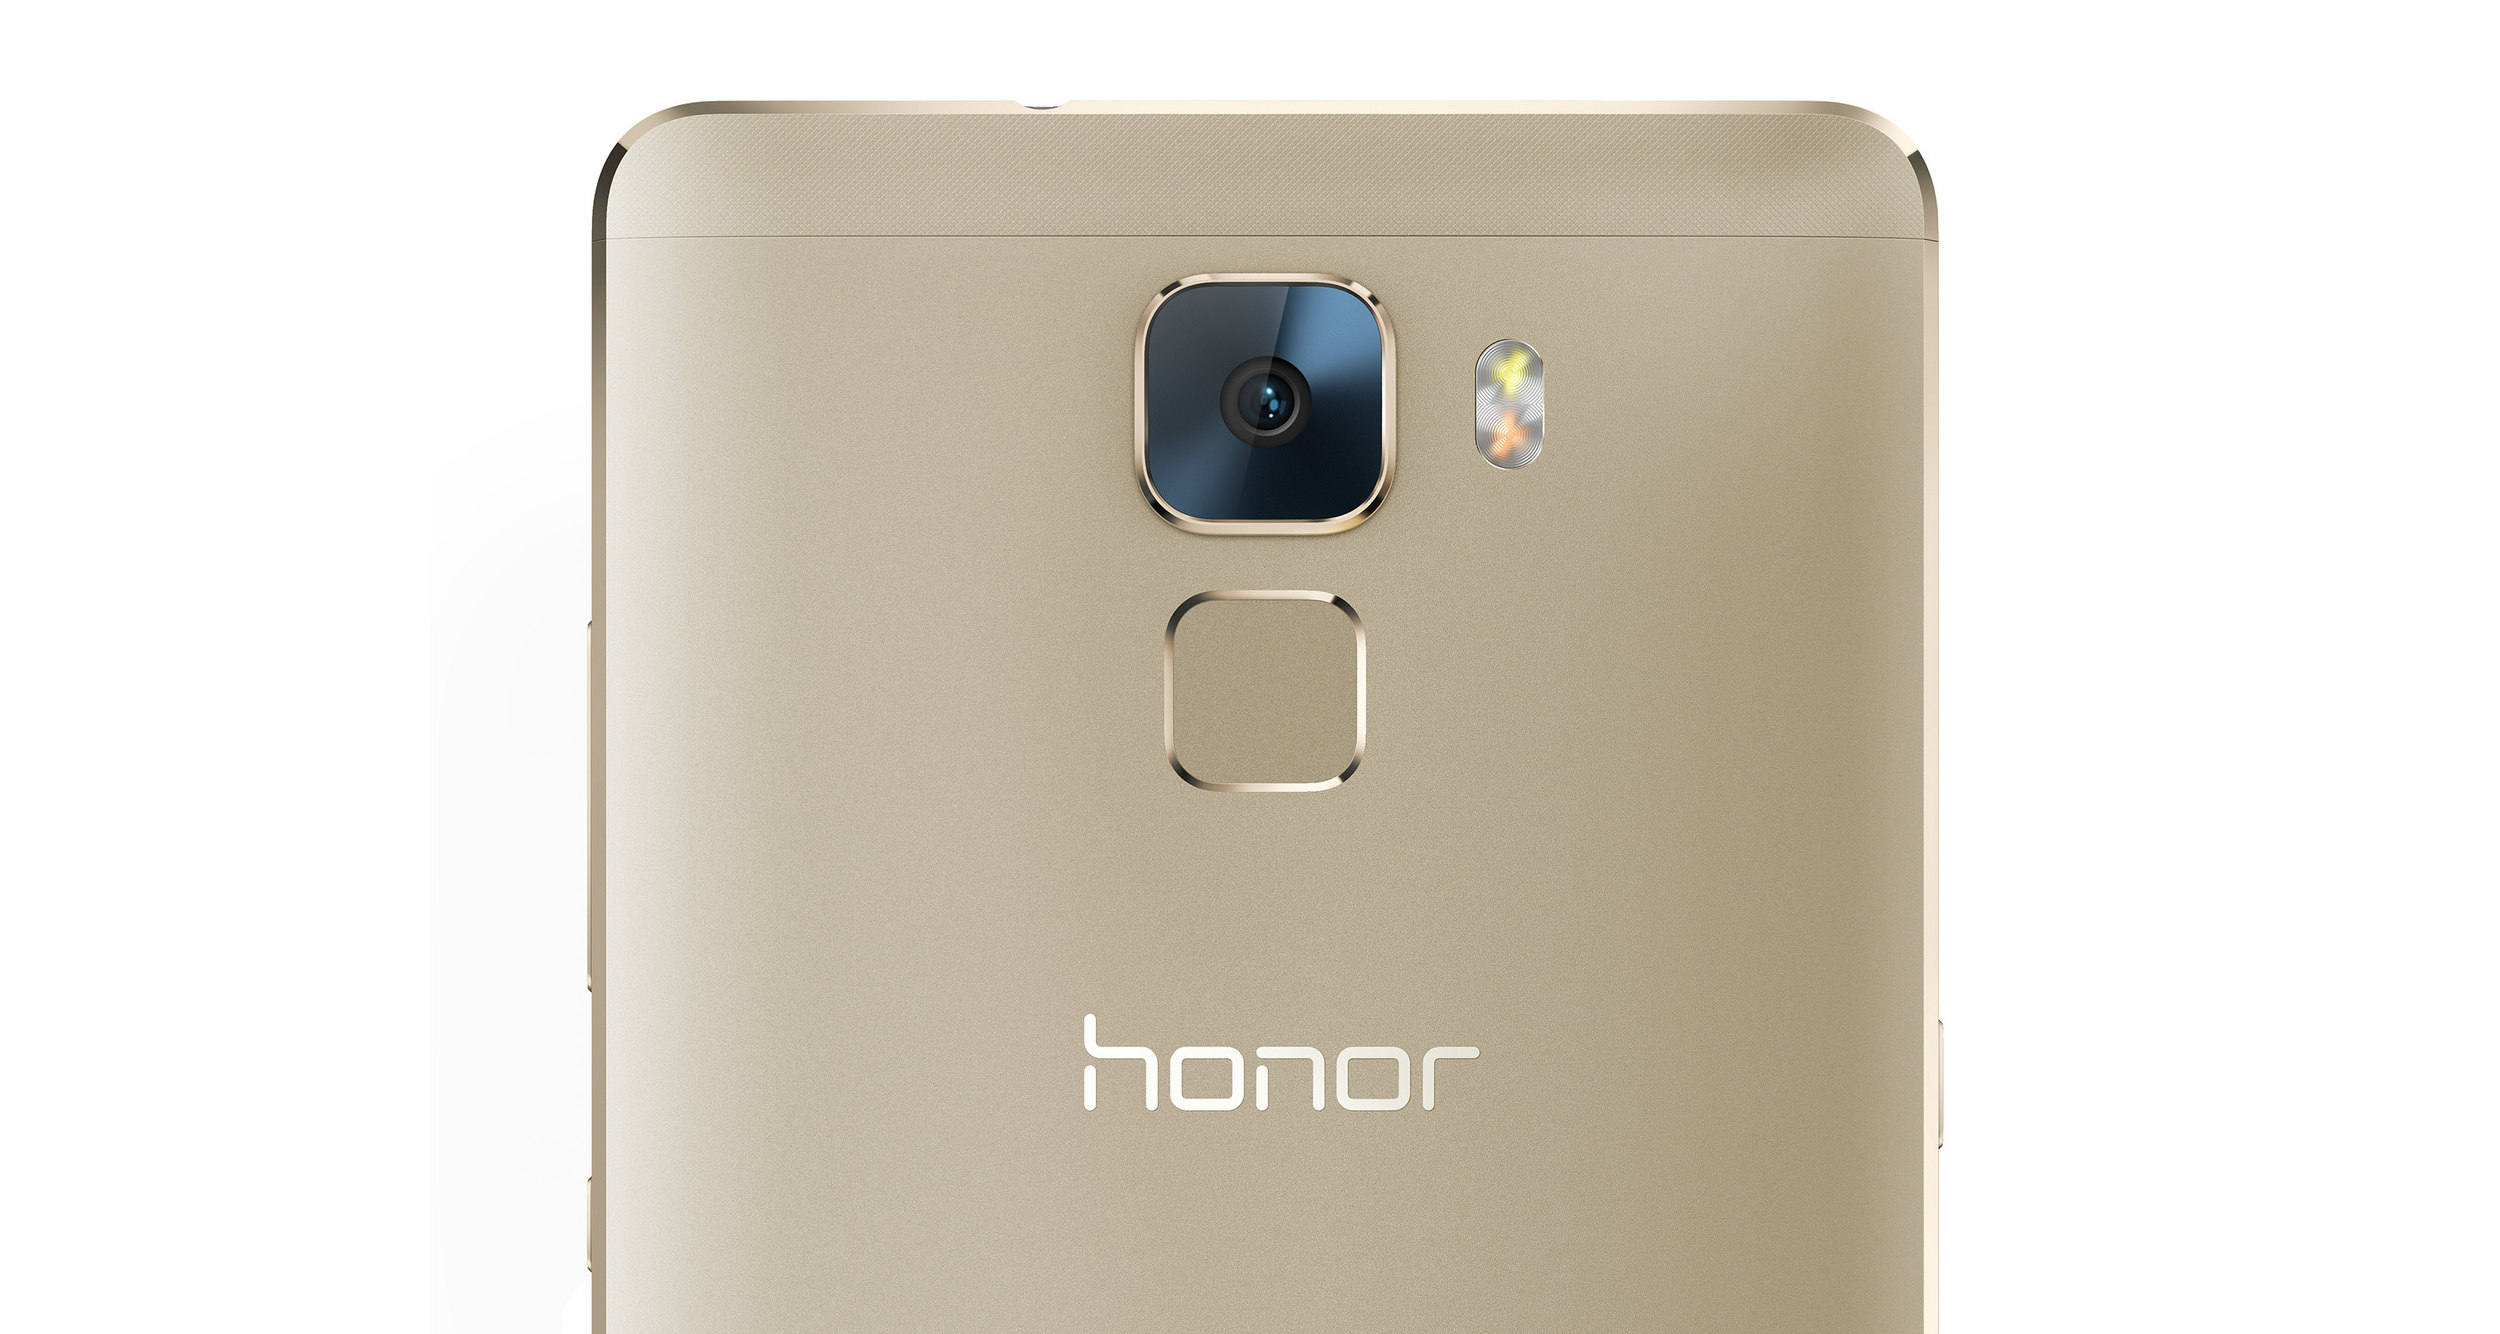 Huawei Honor 7 Fingerprint Scanner